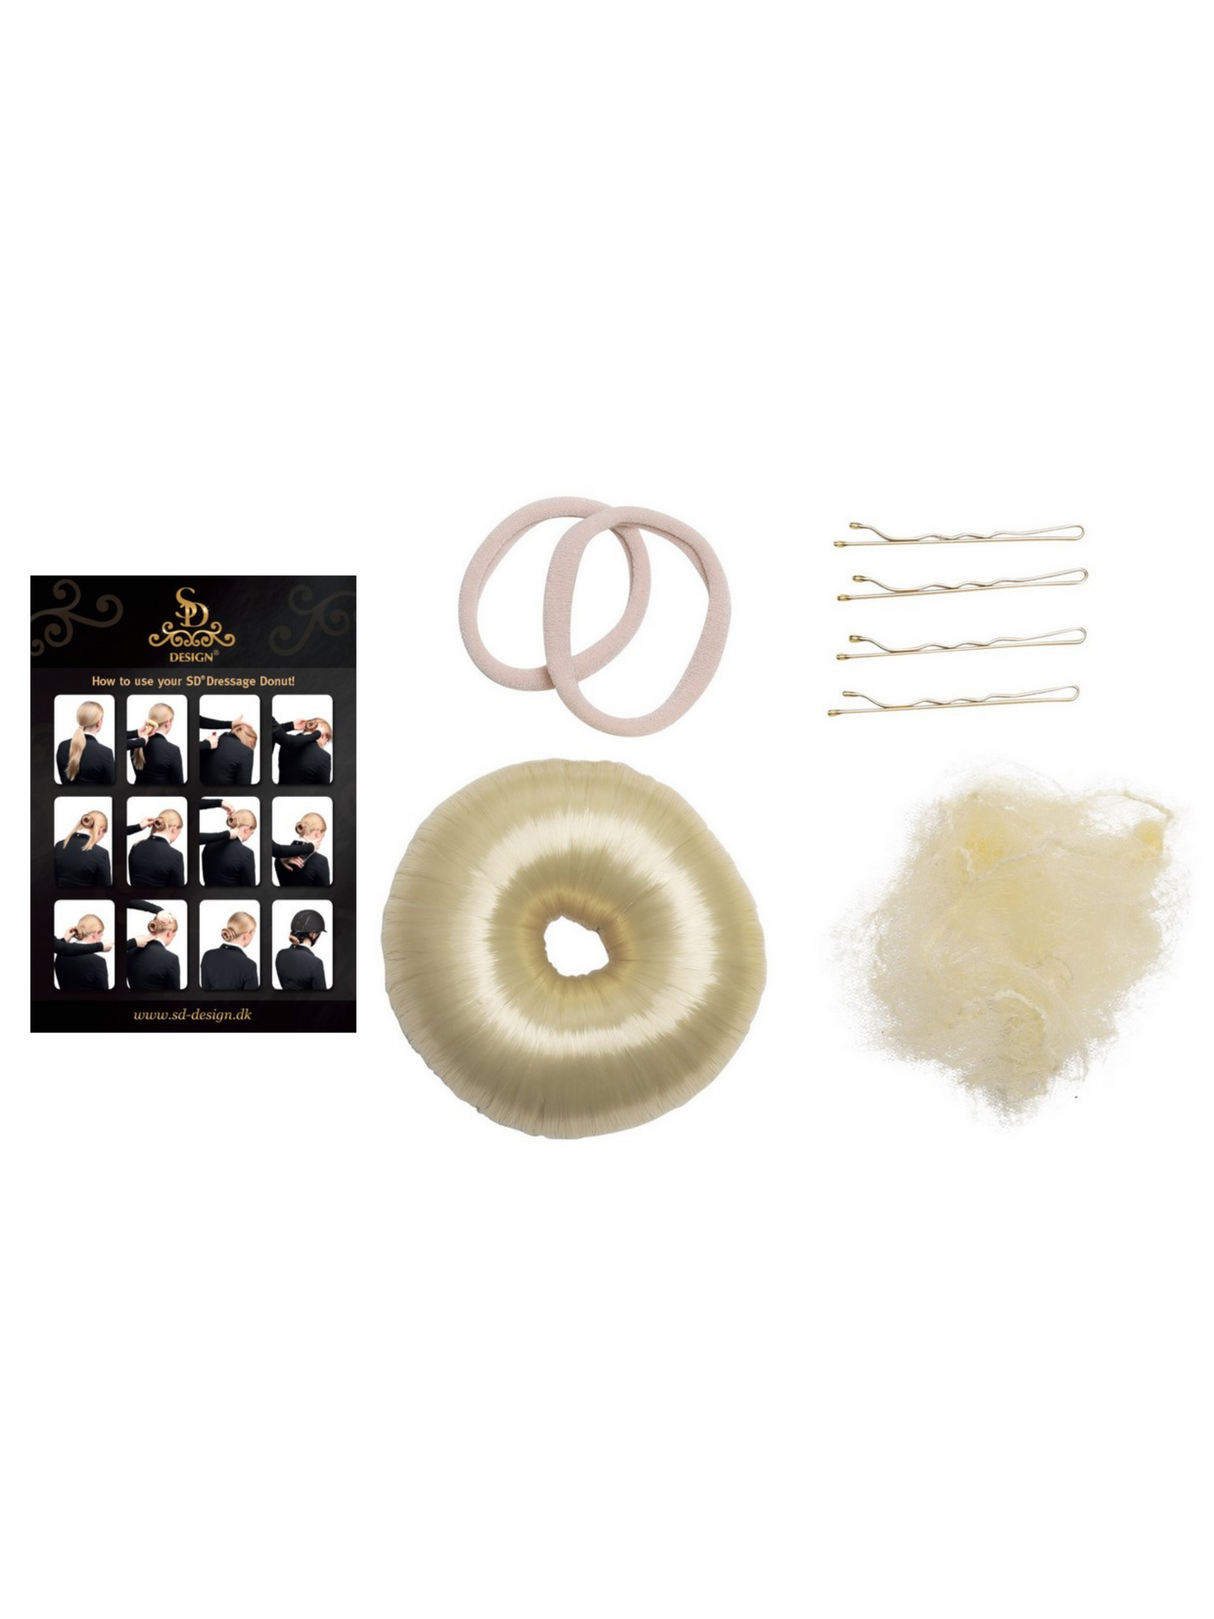 SD Design Complete Dressage Donut Set with Guide Blonde